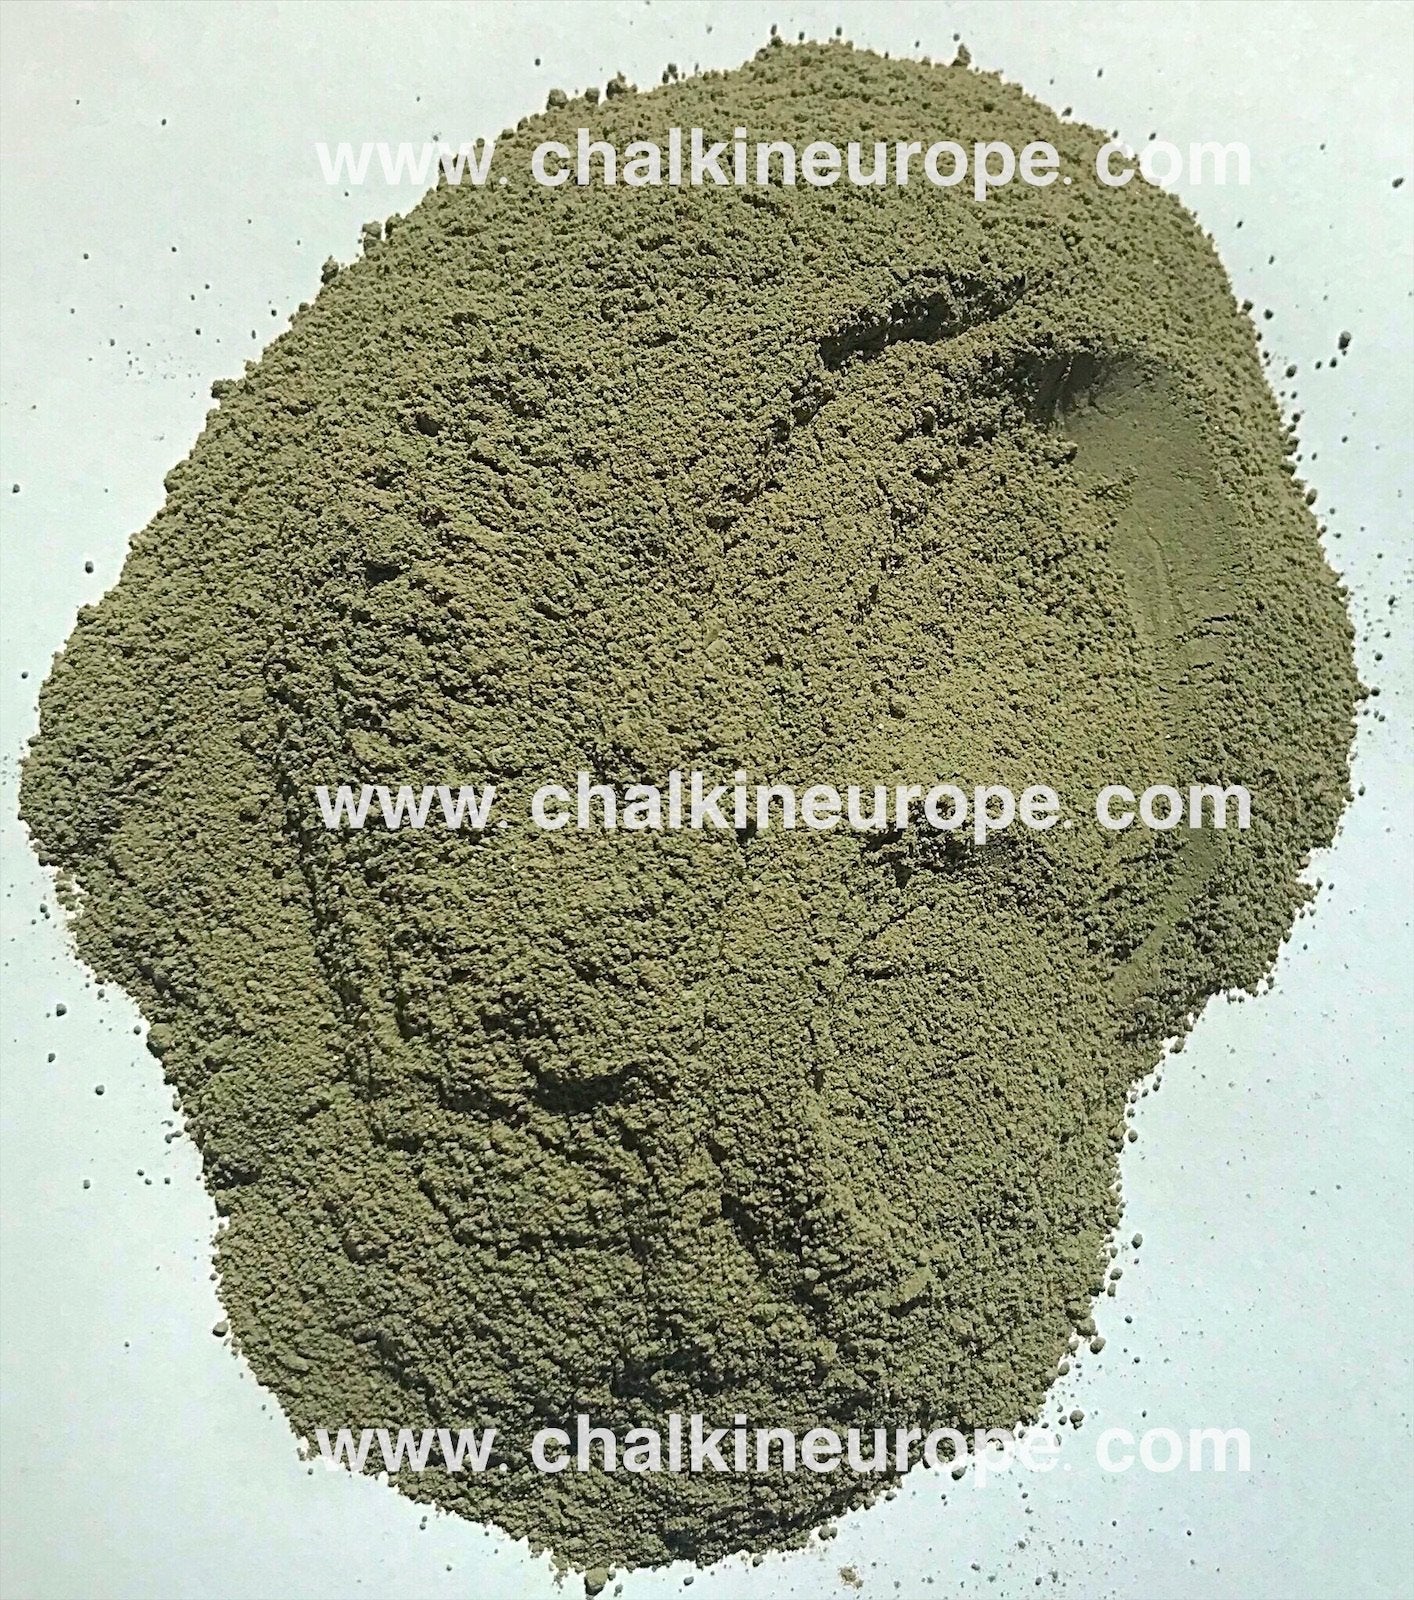 Edible green clay - Chalkineurope